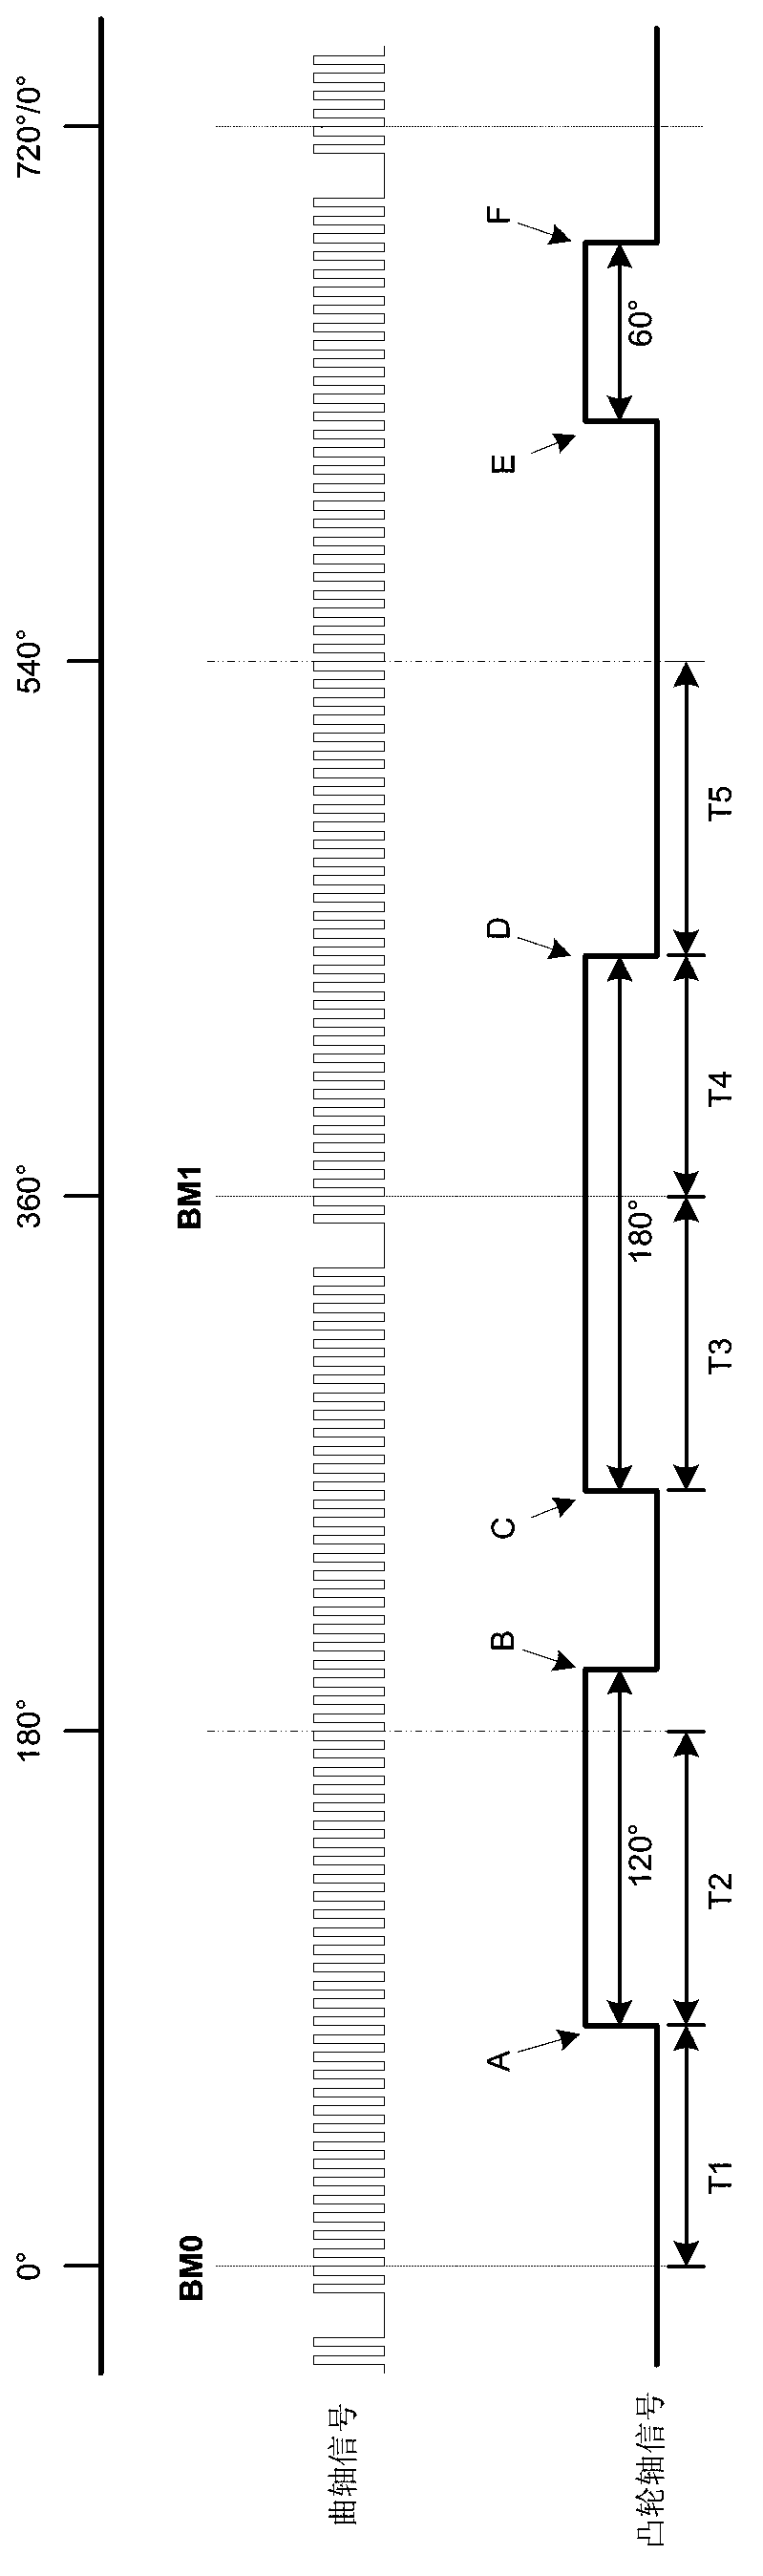 Method of quickly identifying crankshaft position